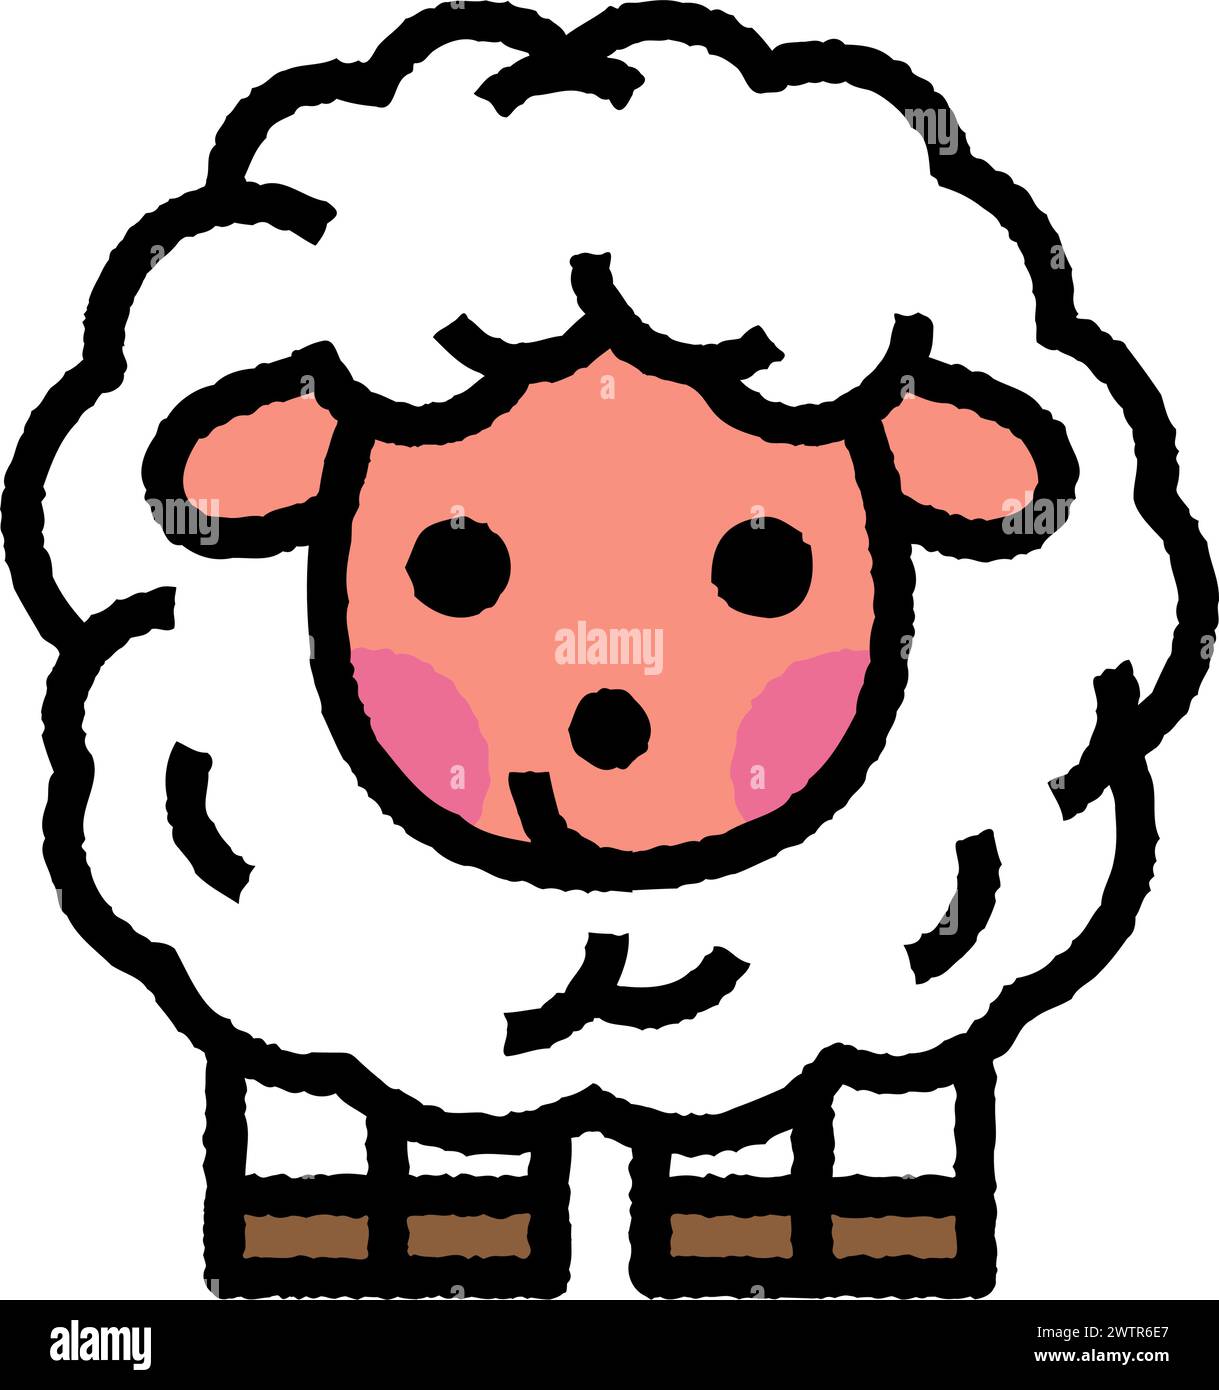 sheep cartoon roughen filled outline icon for decoration, website, web, mobile app, printing, banner, logo, poster design, etc. Stock Vector